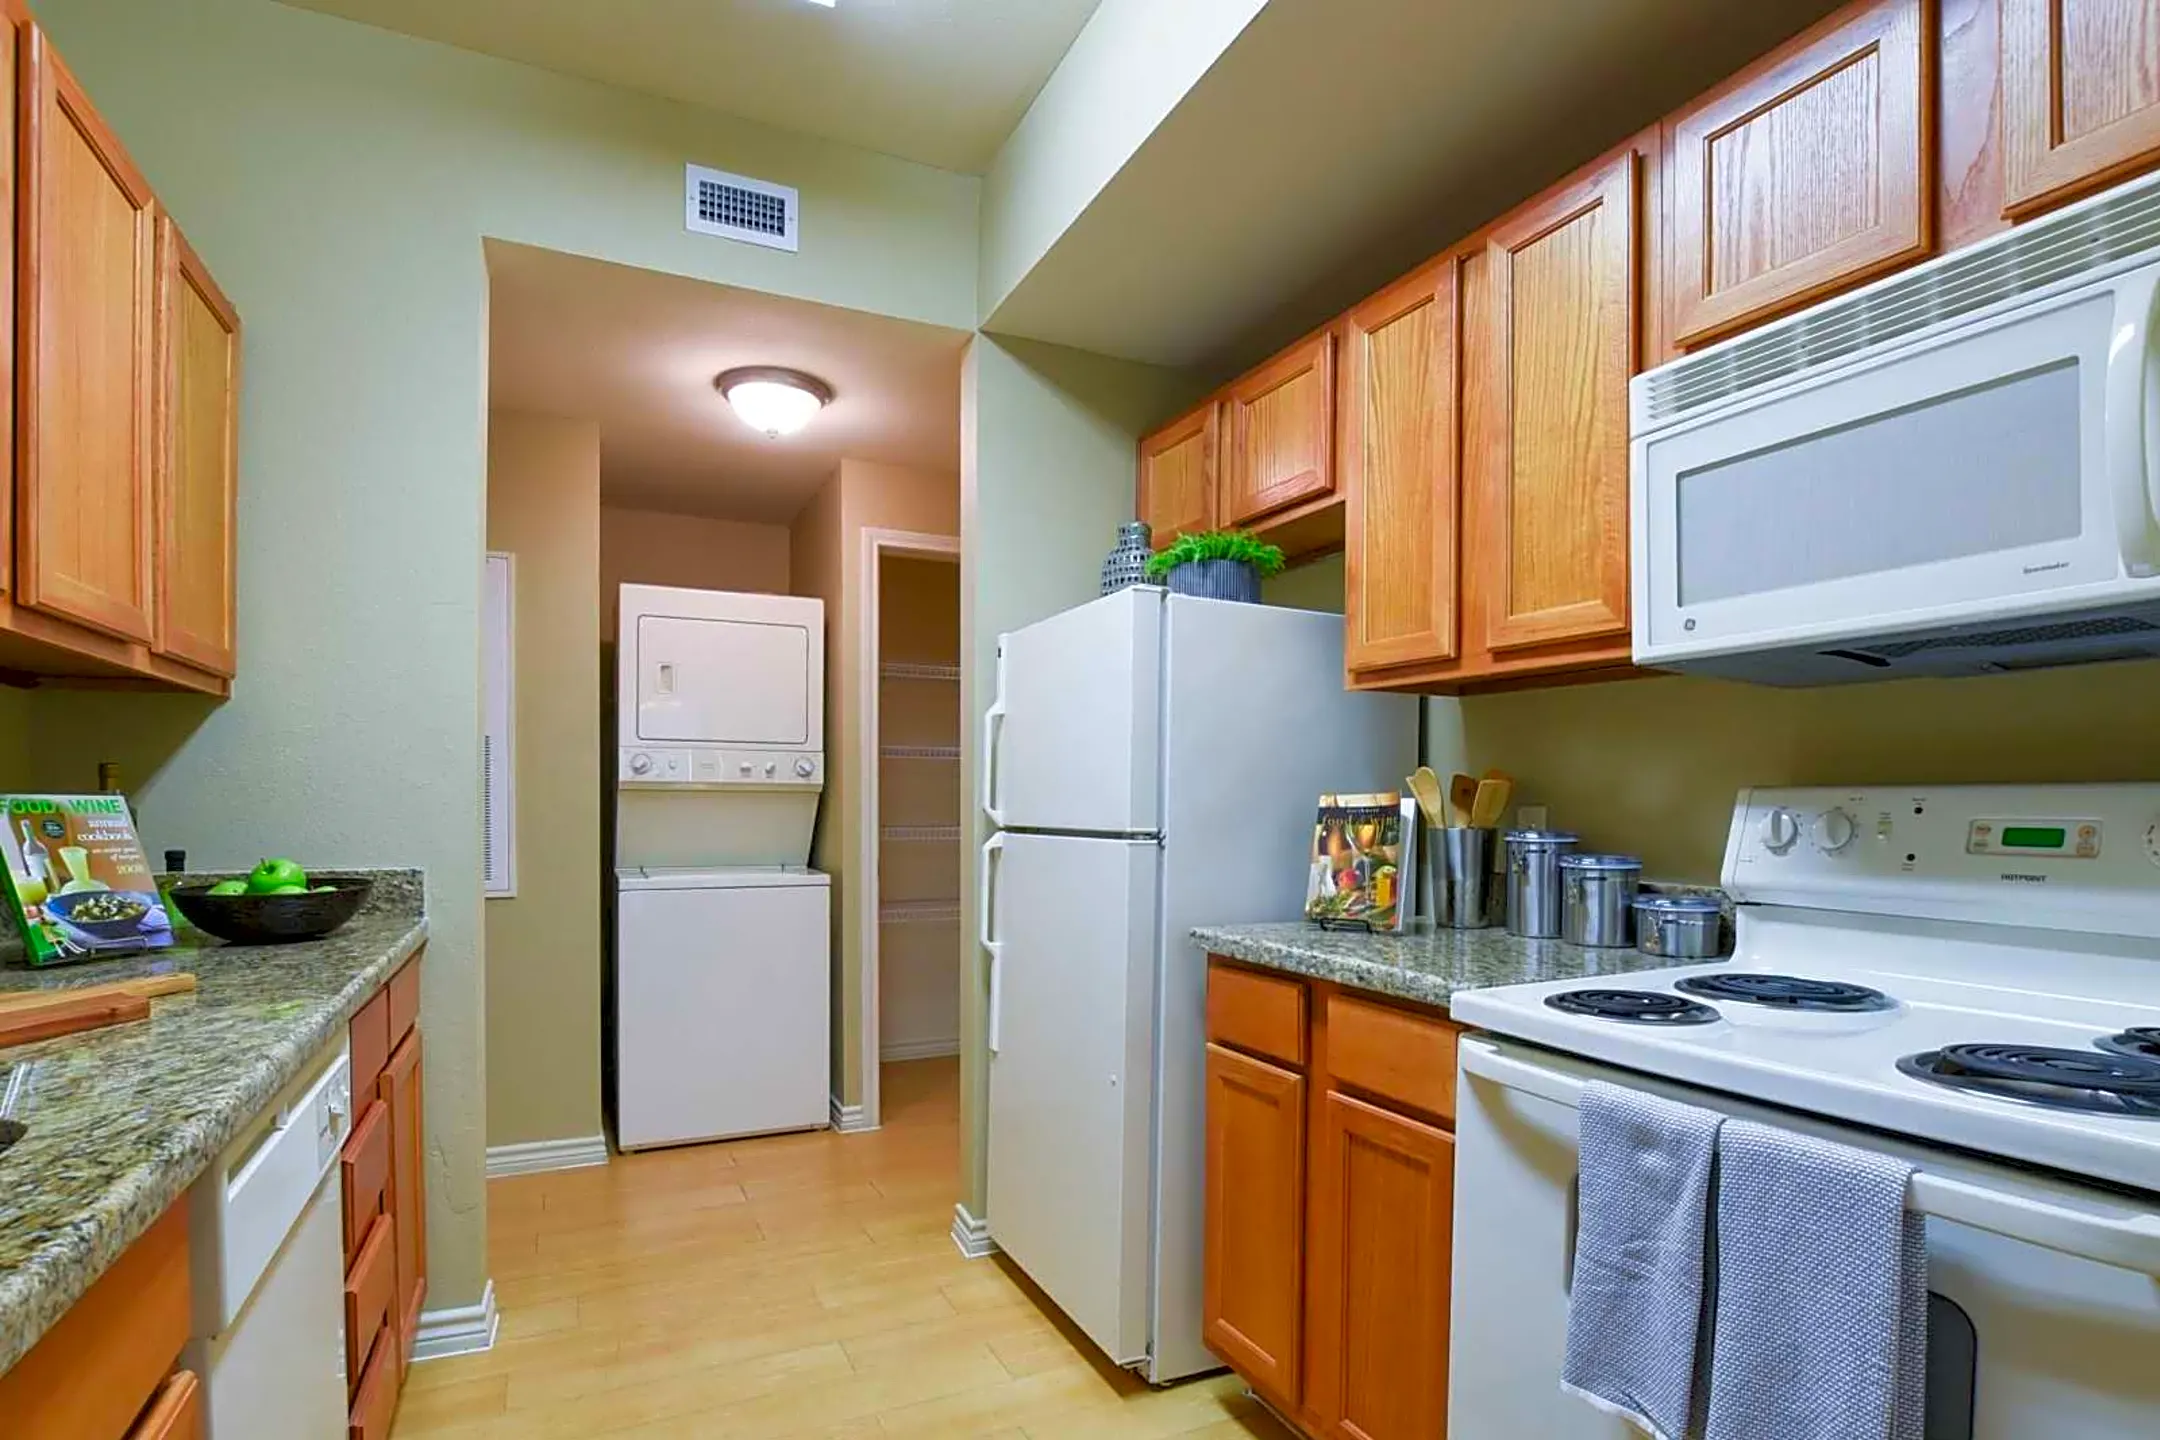 Kitchen - Carmel Apartment Homes - Laredo, TX